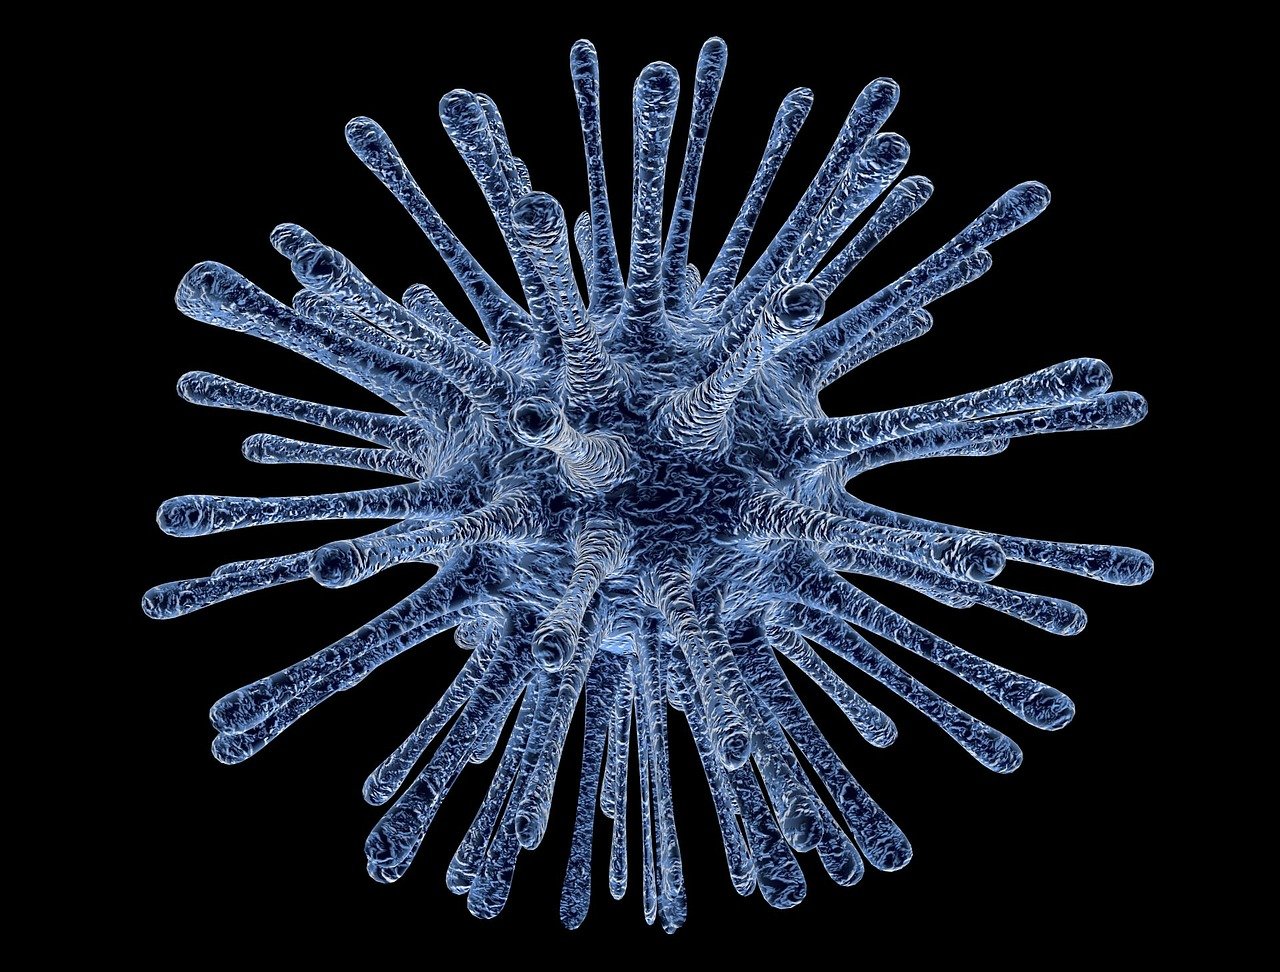 HIV patient with COVID developed 21 mutations of coronavirus: Study